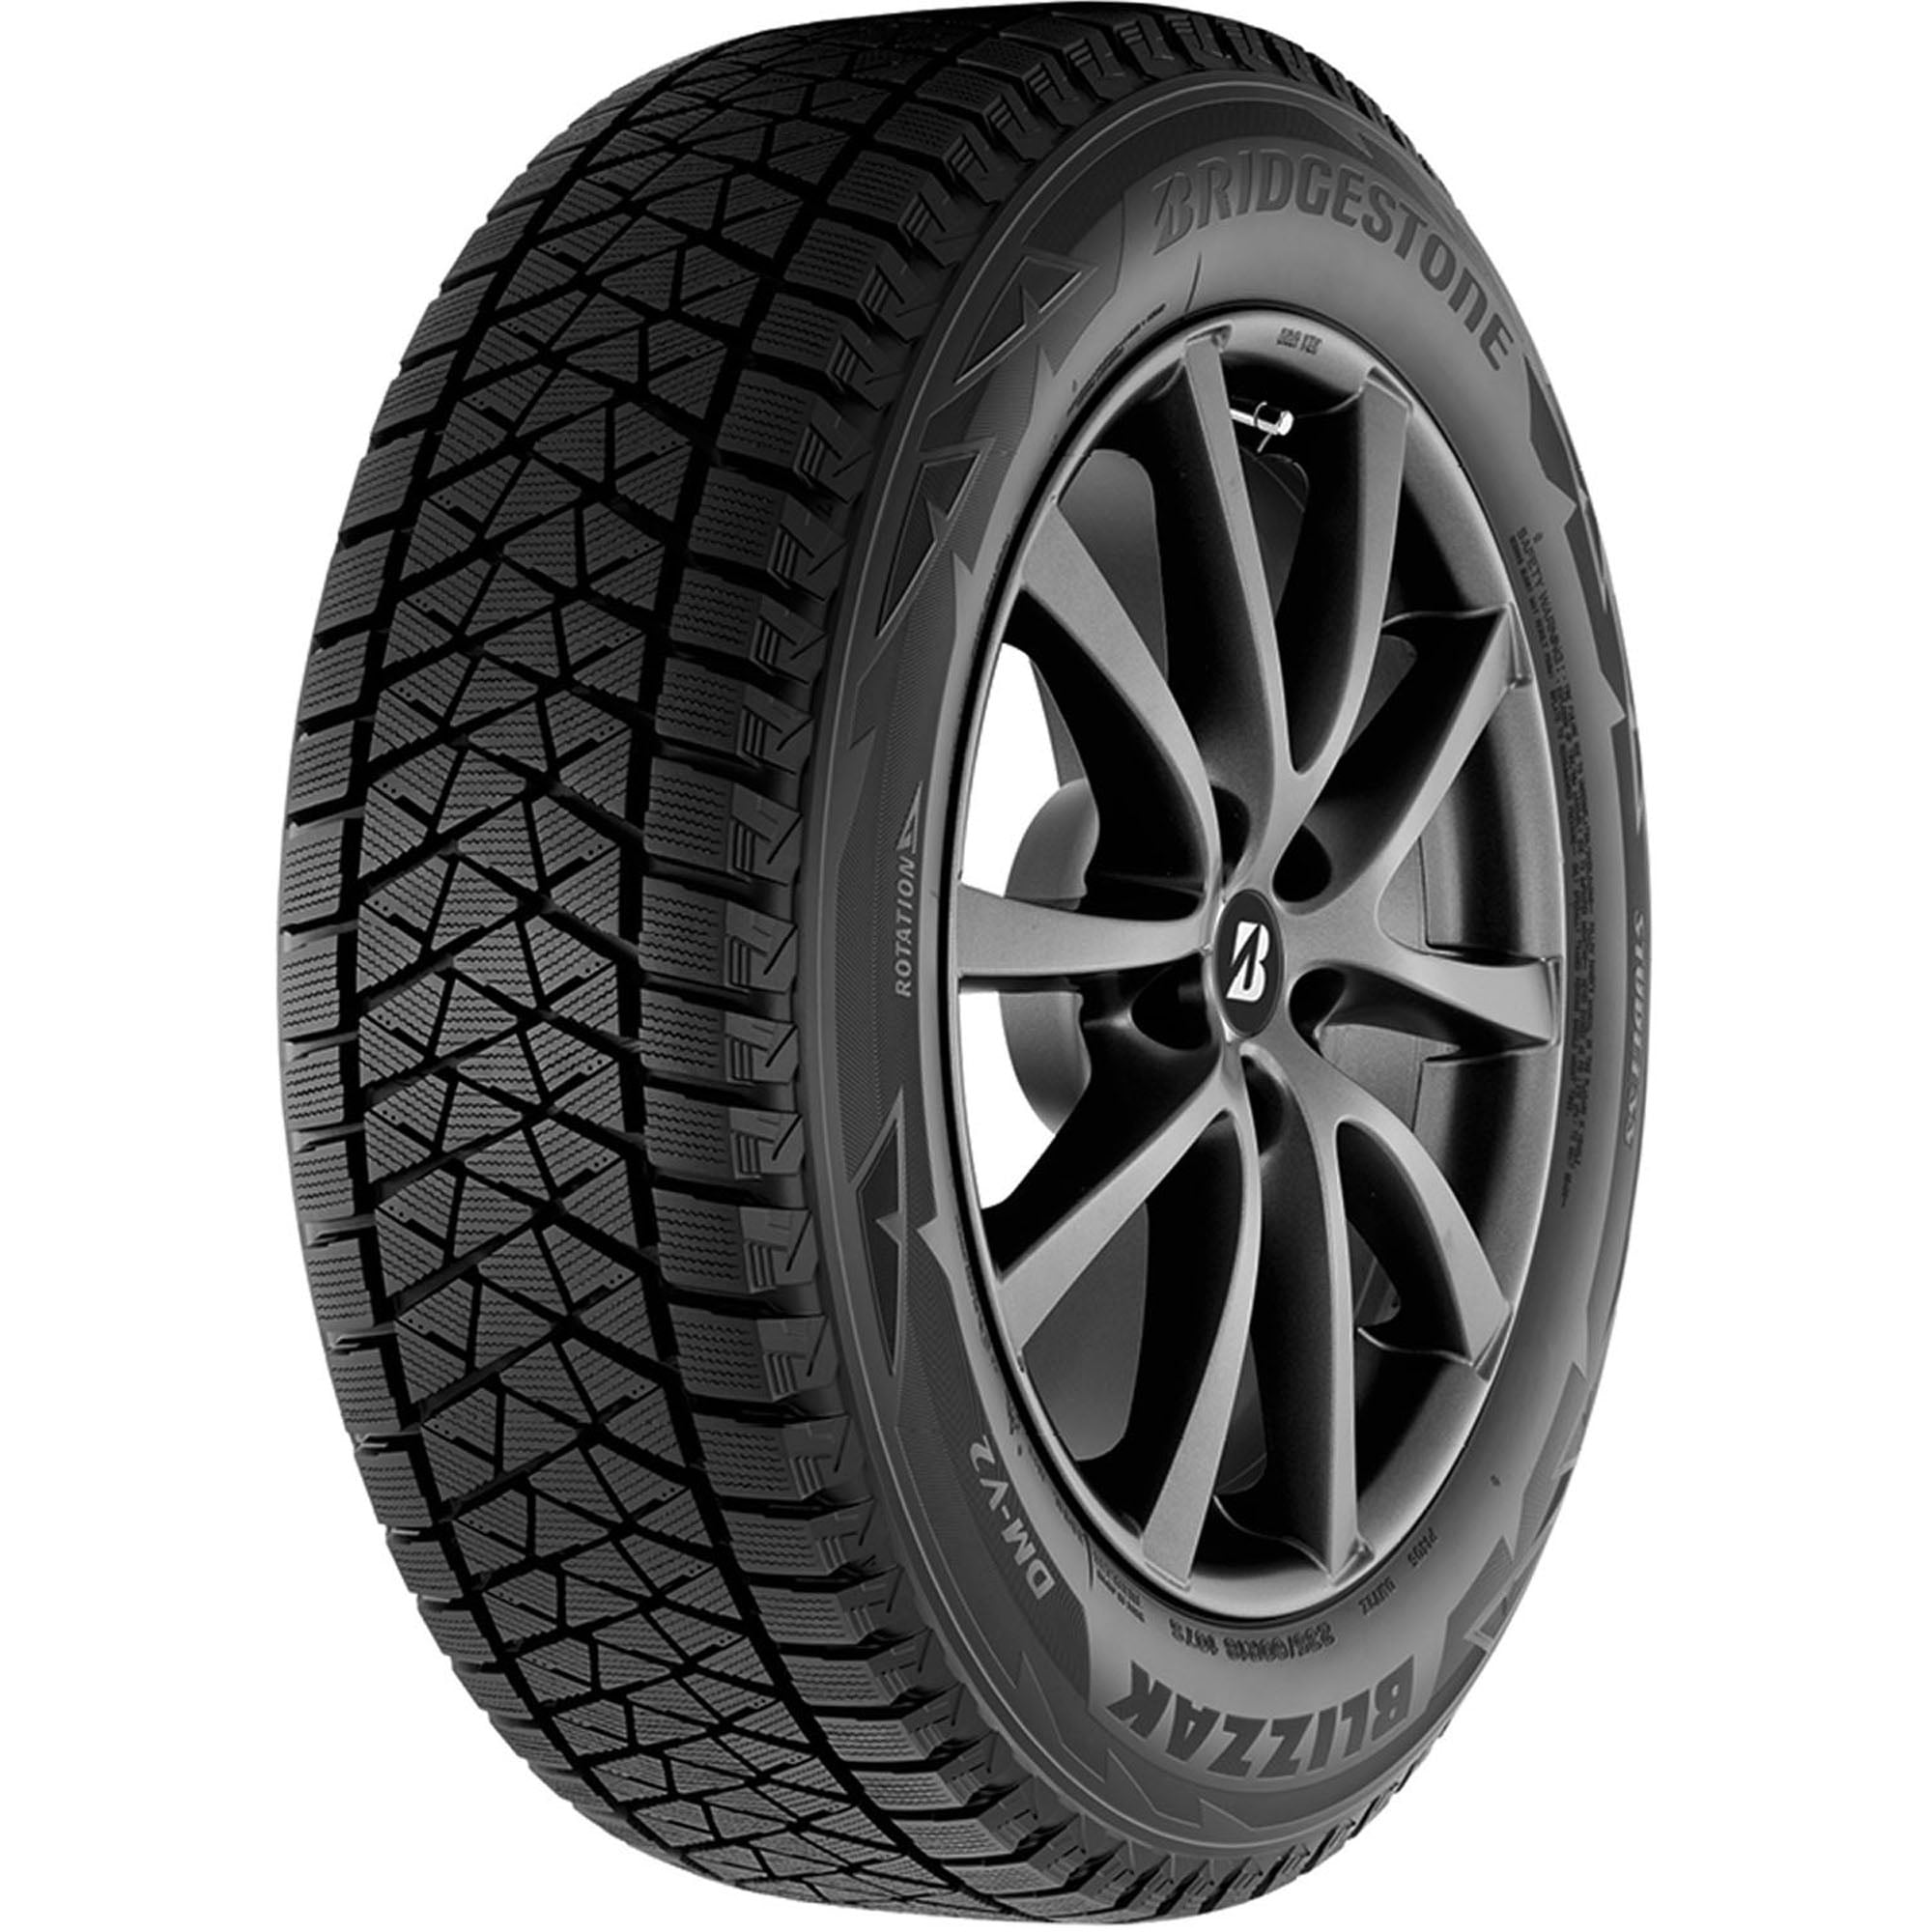 T 102 225/65R17 Goodyear Grip Tire. Winter Ultra